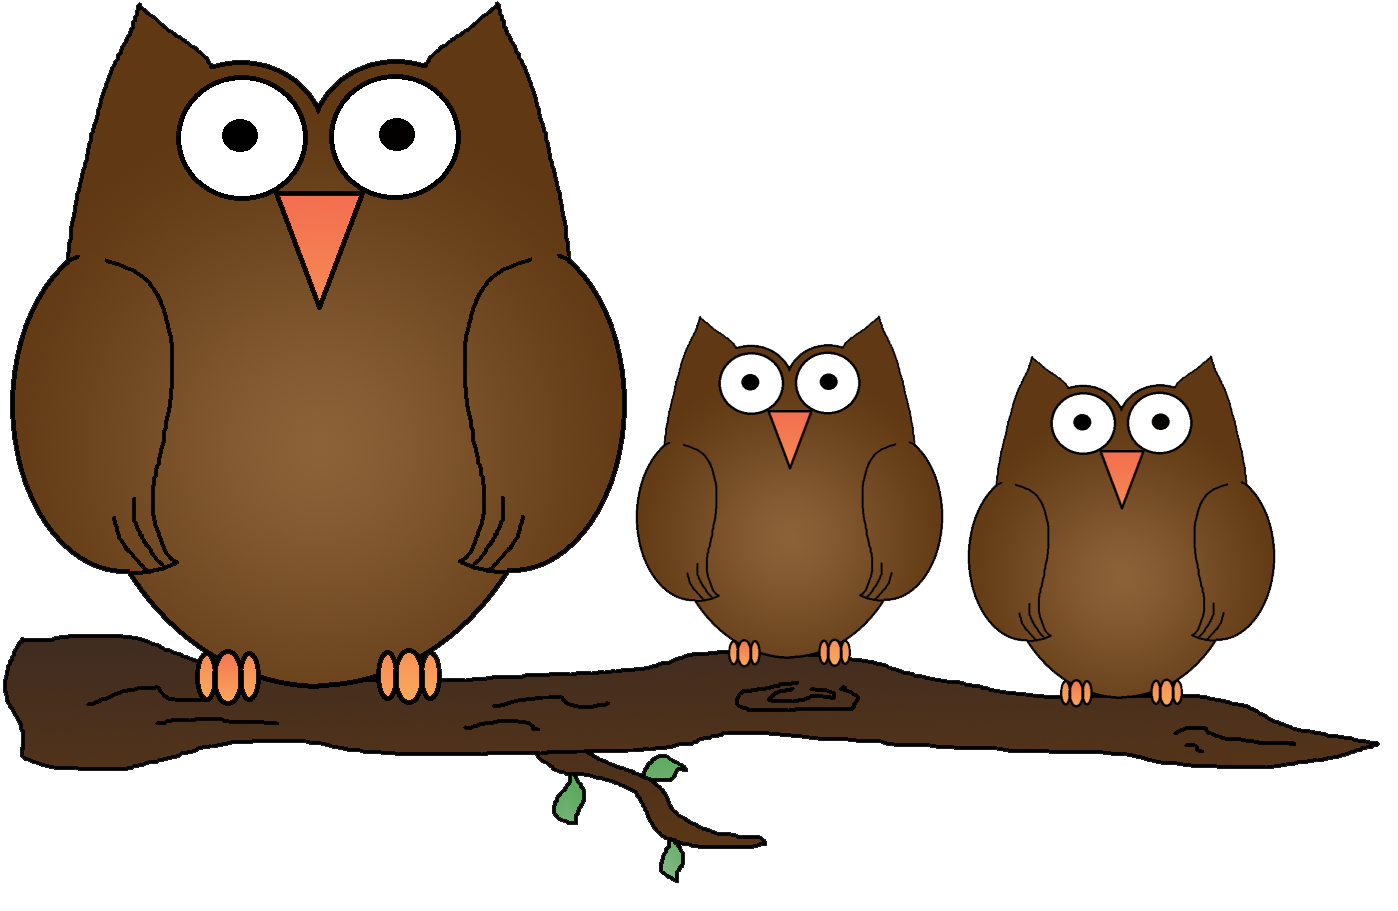 Free cartoon owl clipart image #3